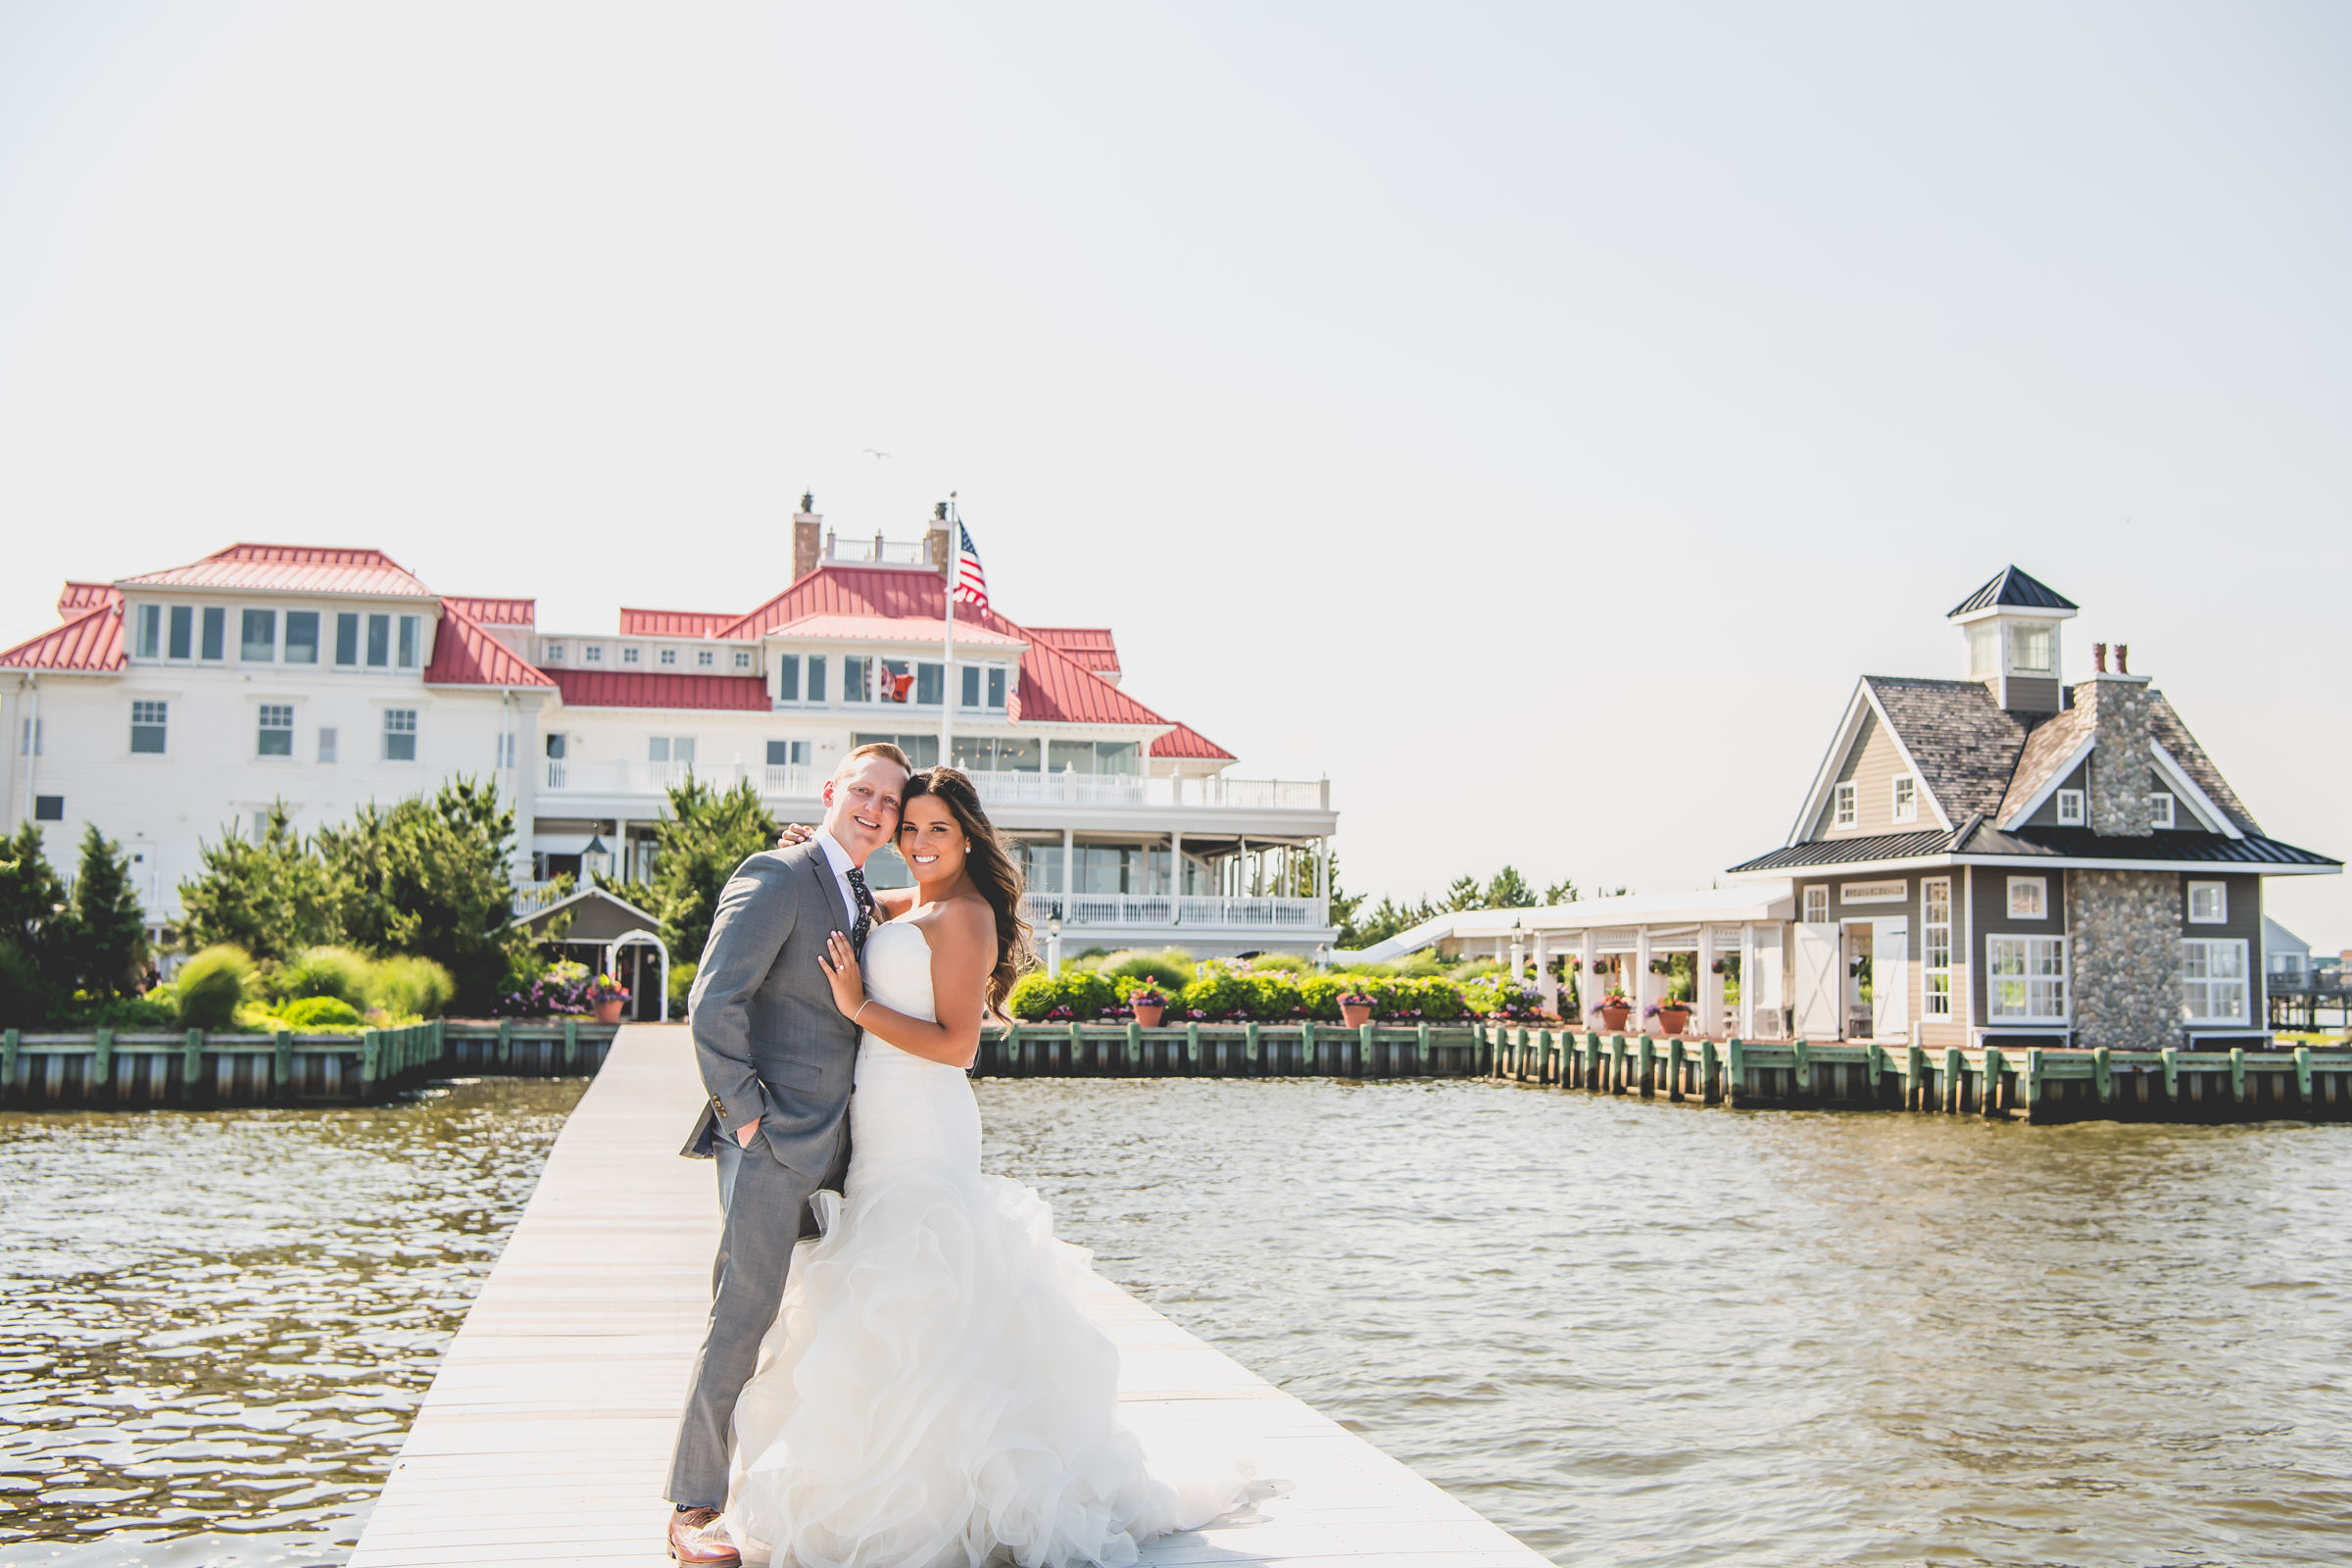 Mallard Island Yacht Club wedding photographed by Nicole Klym Photography near Long Beach Island NJ.